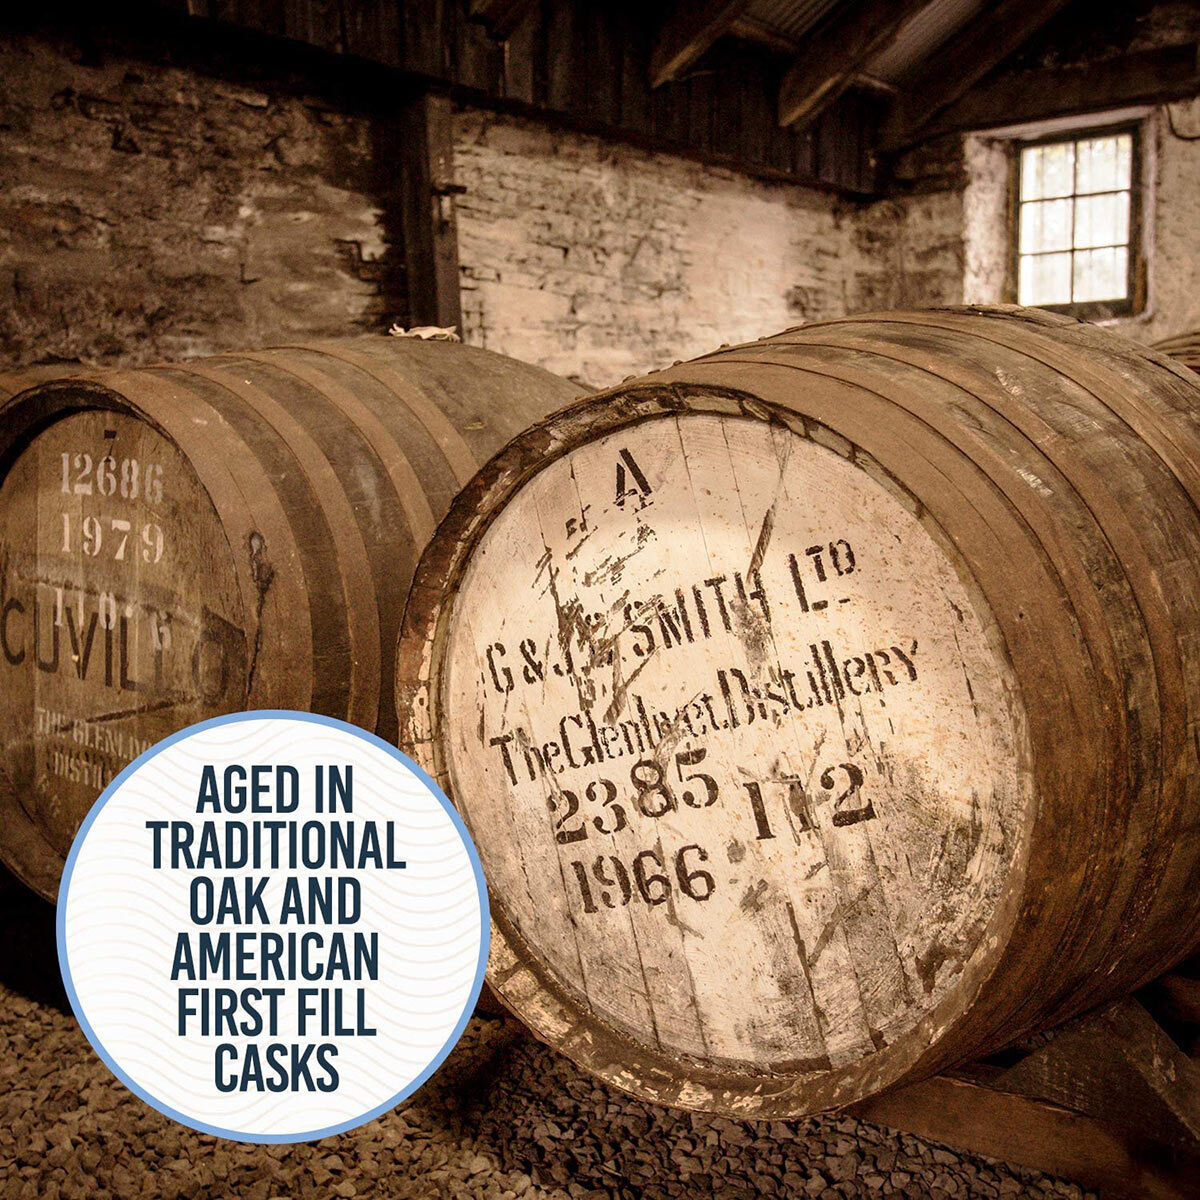 Lifestyle image of oak barrels